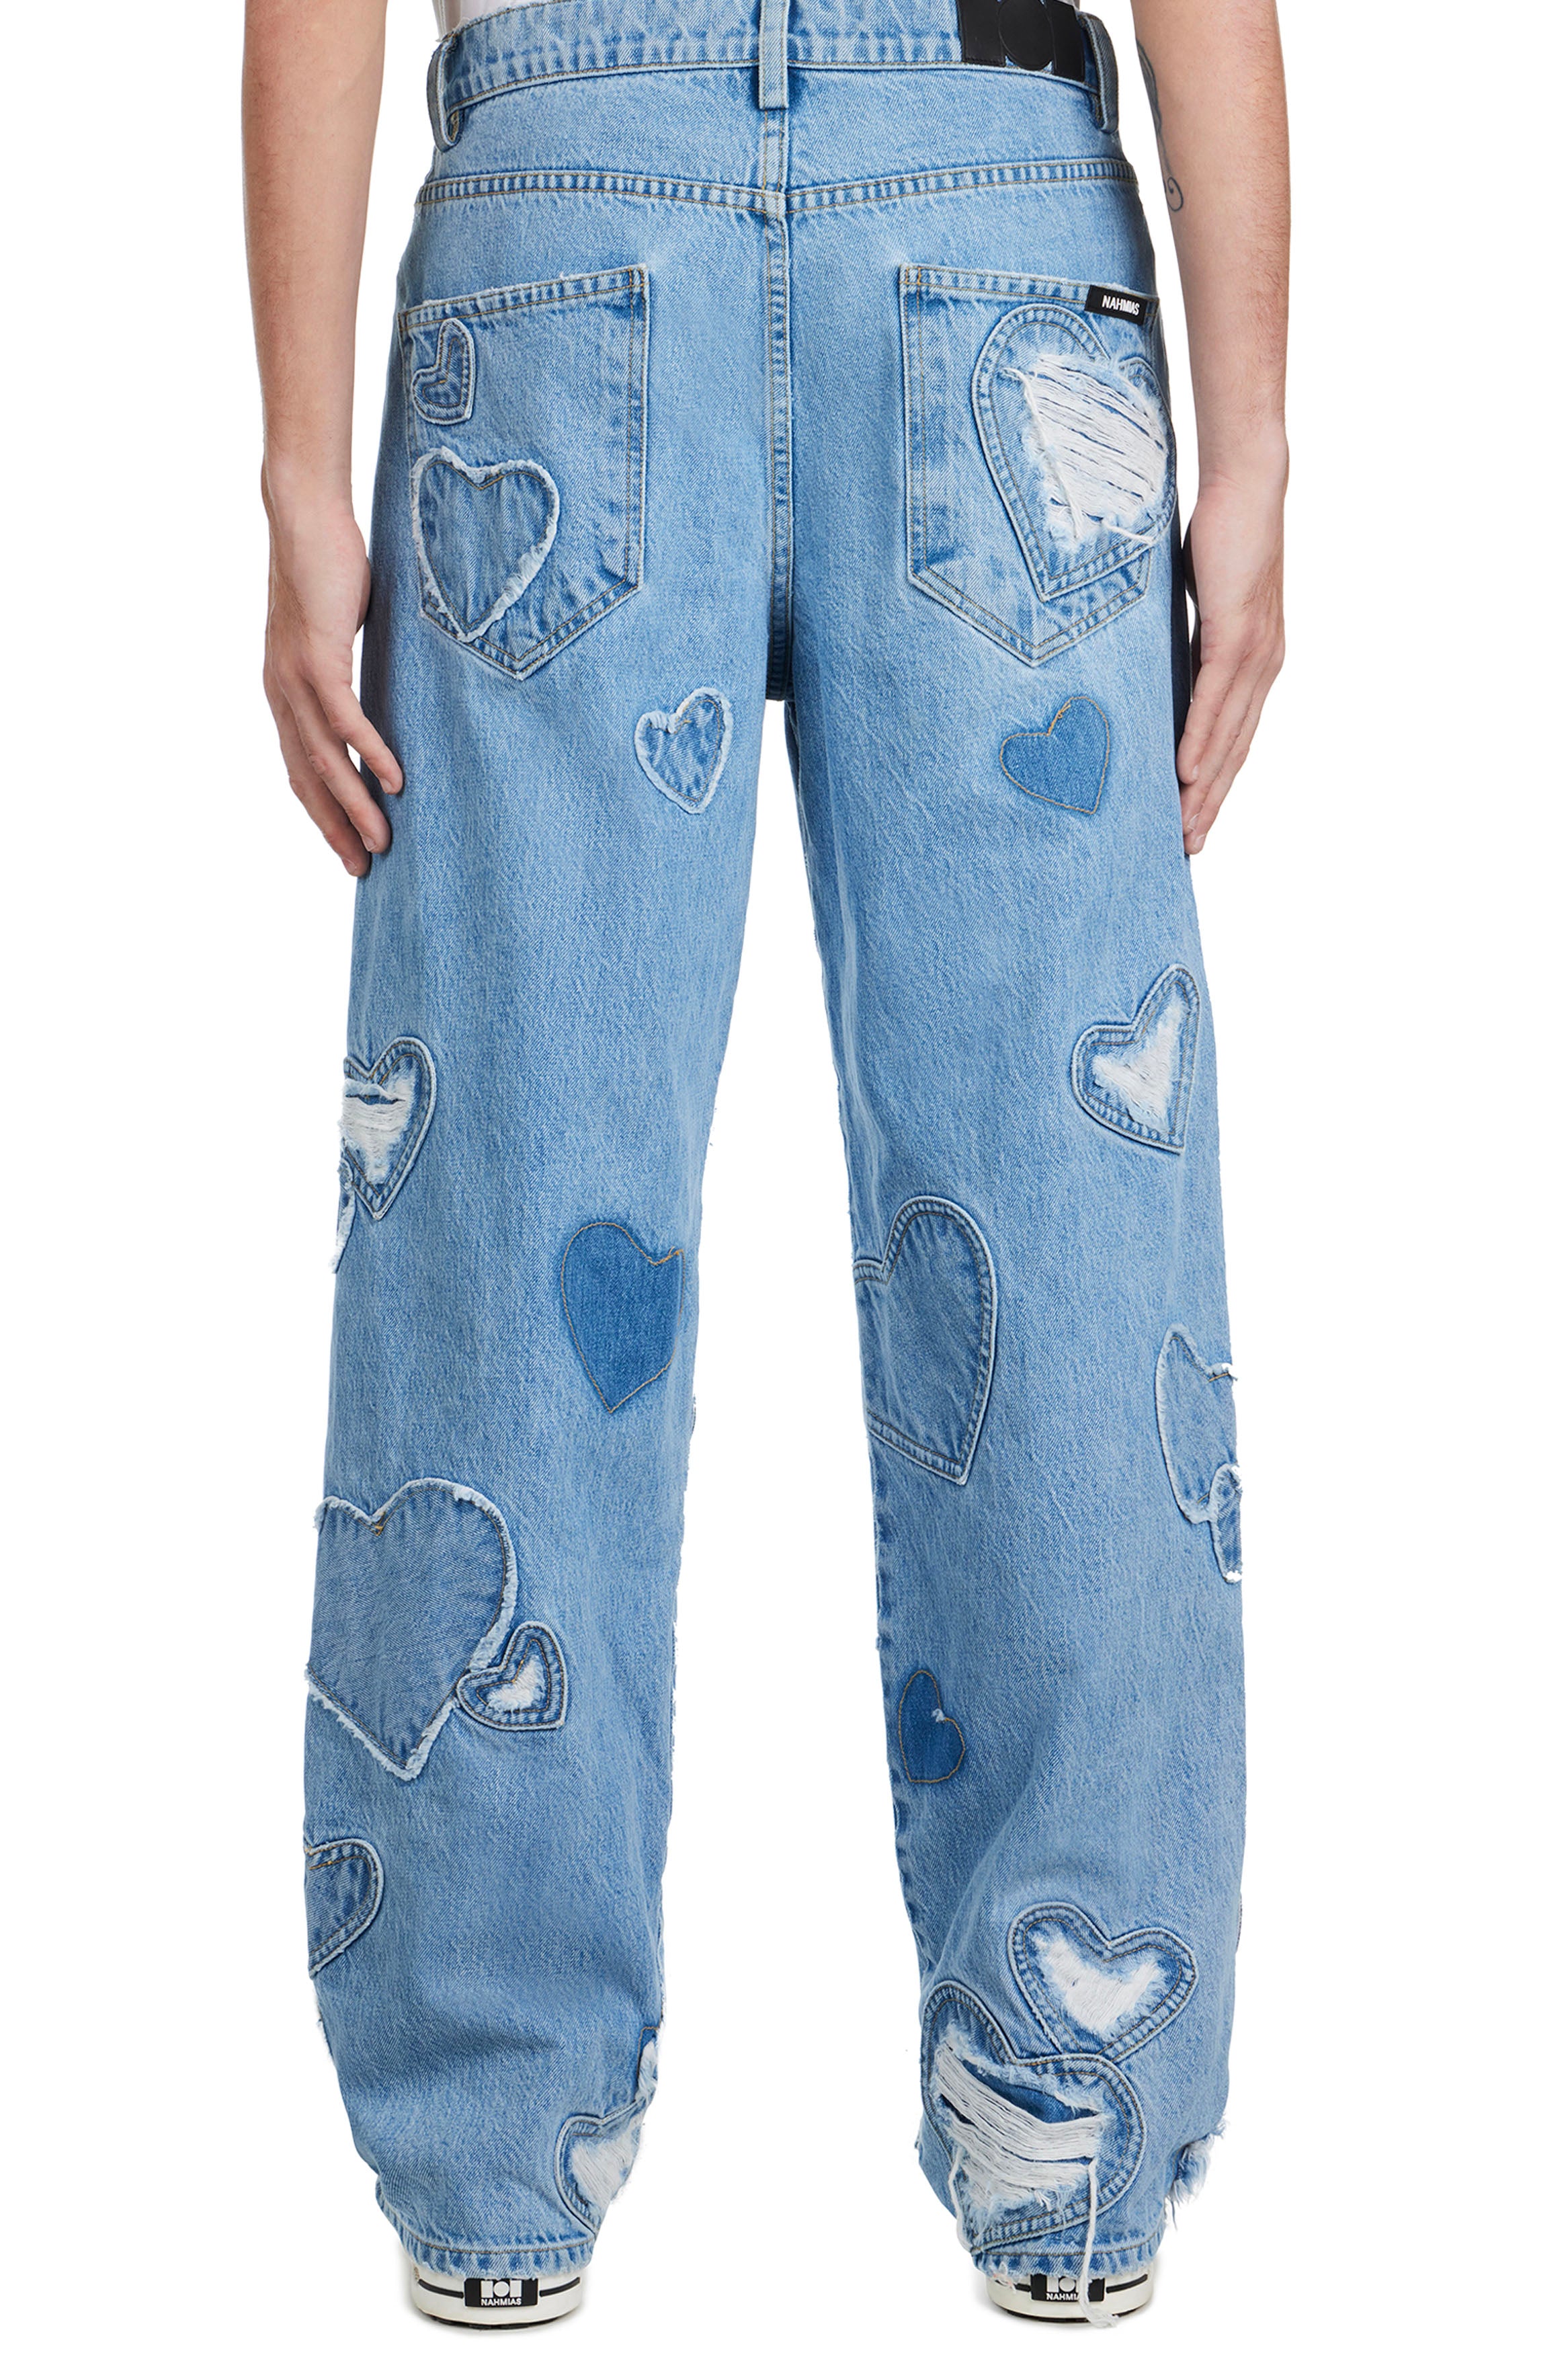 Denim Heart Patchwork Jeans